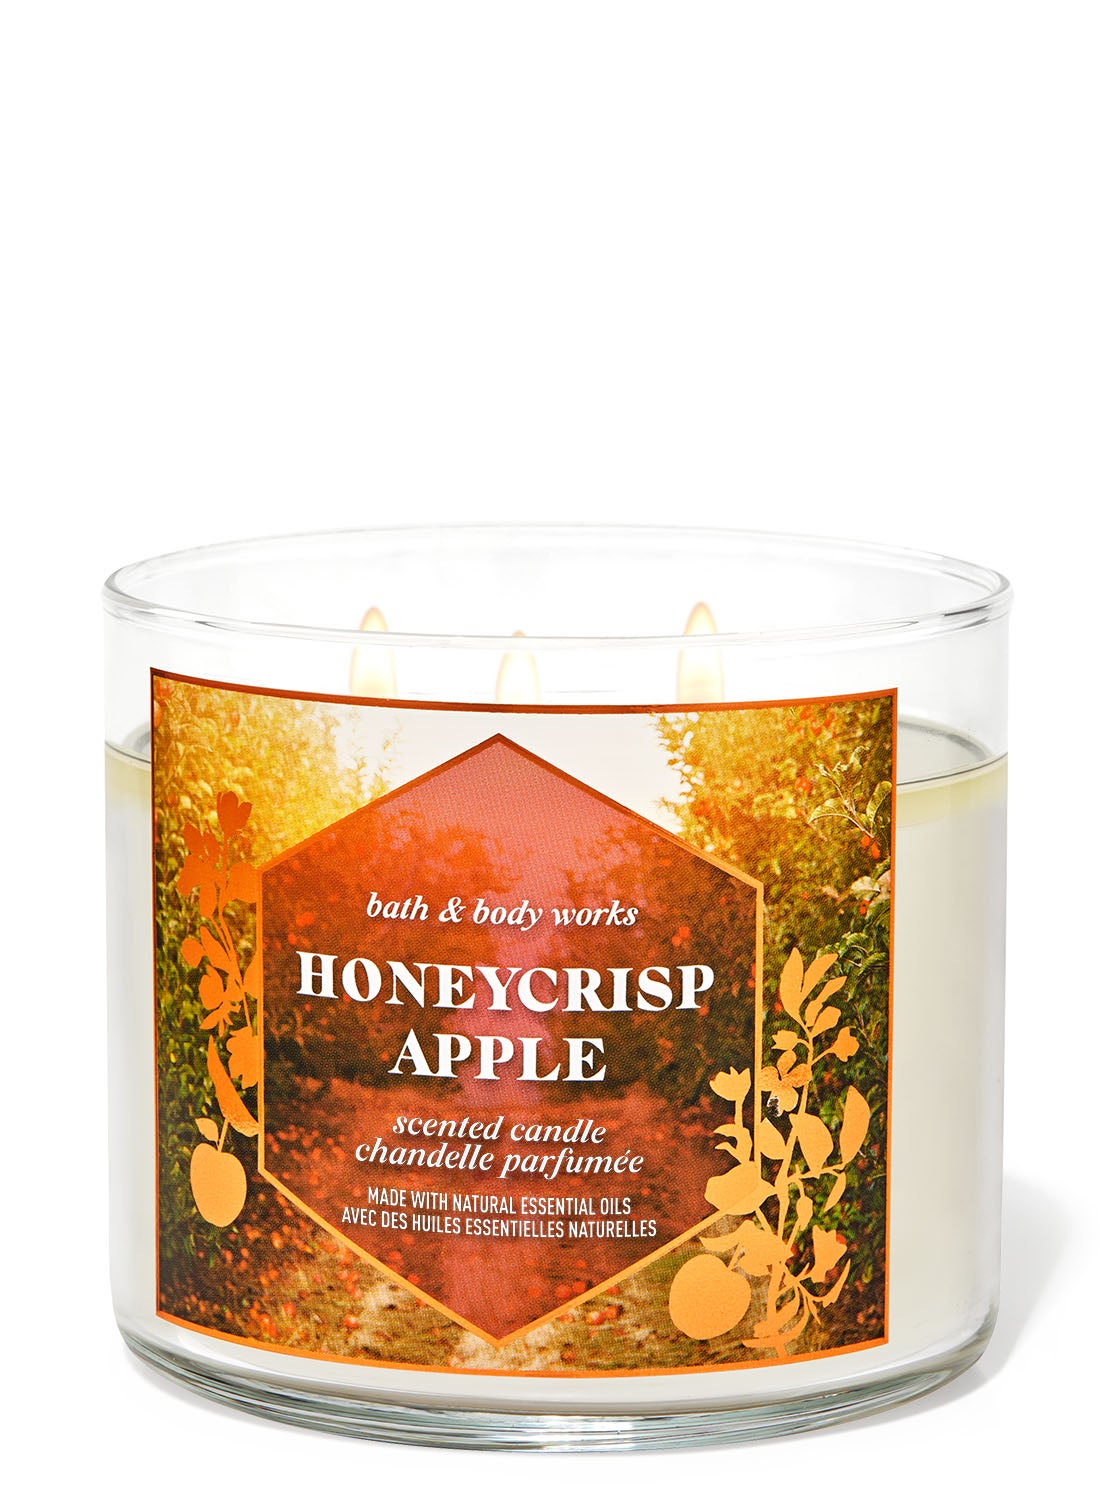 bath and body works honeycrisp apple